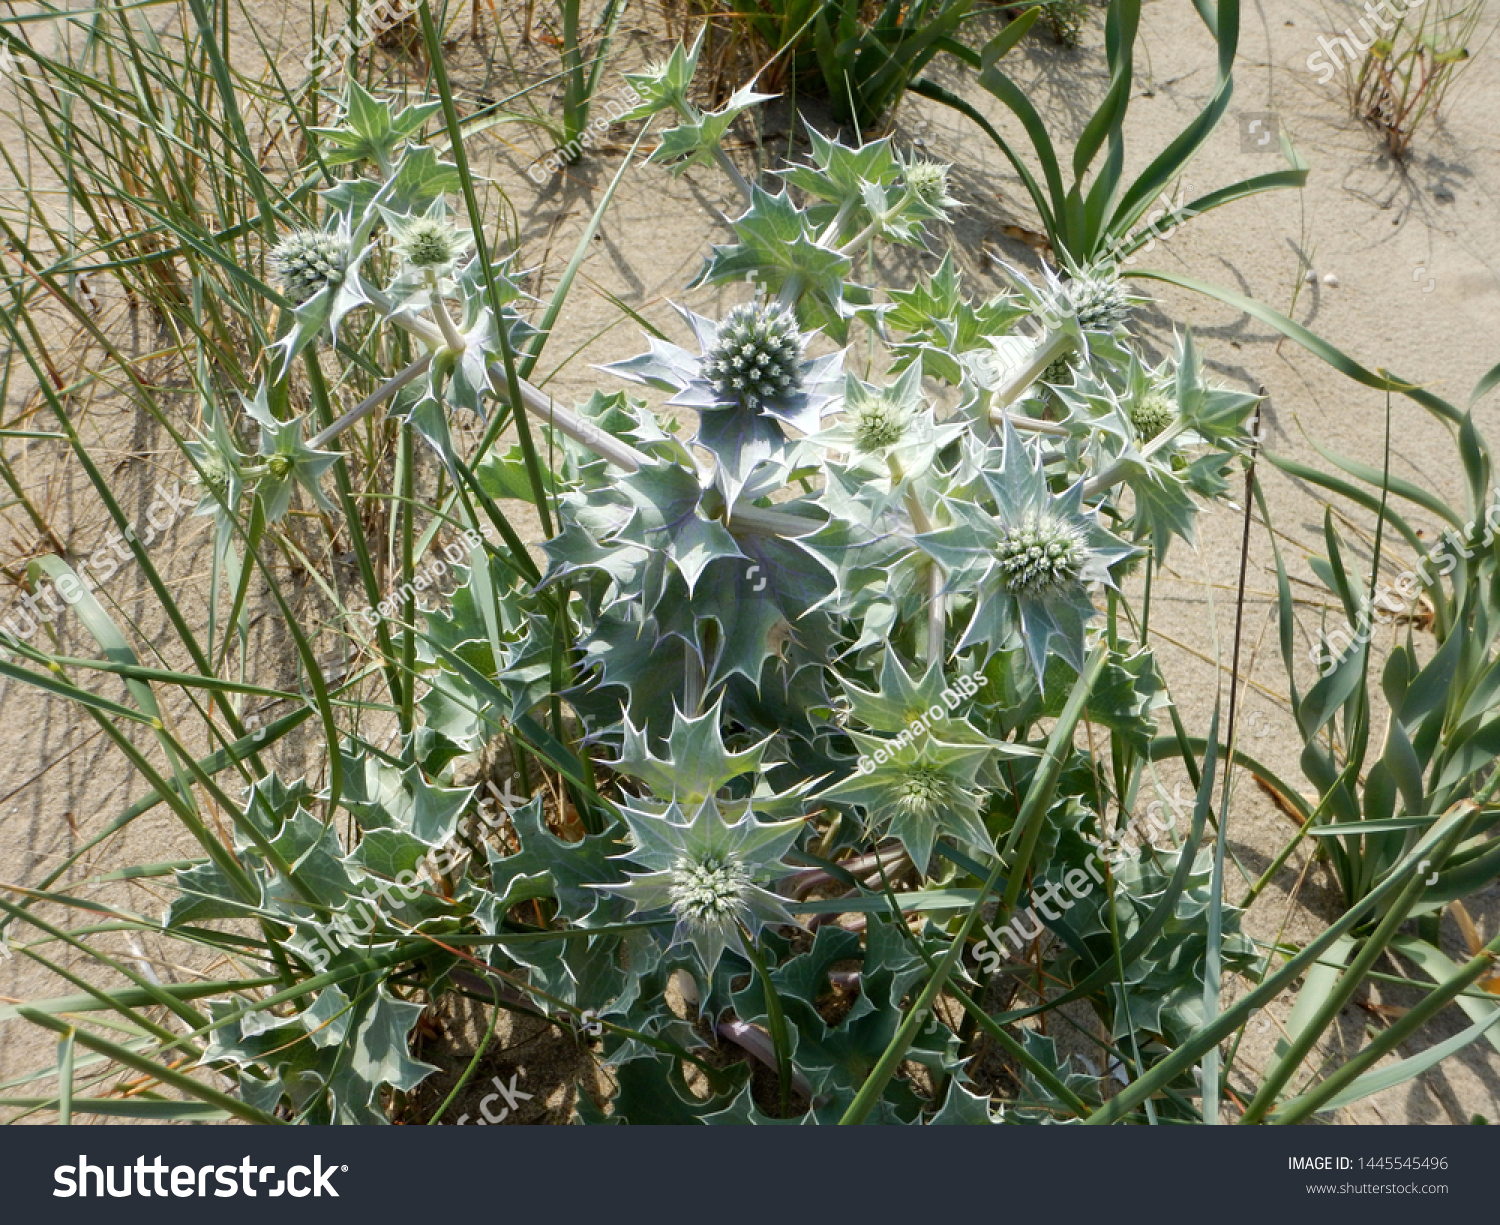 plant of sea holly or seaside eryngo eryngium maritimum grows in the dunes of sandy shores of mediterranean sea #1445545496